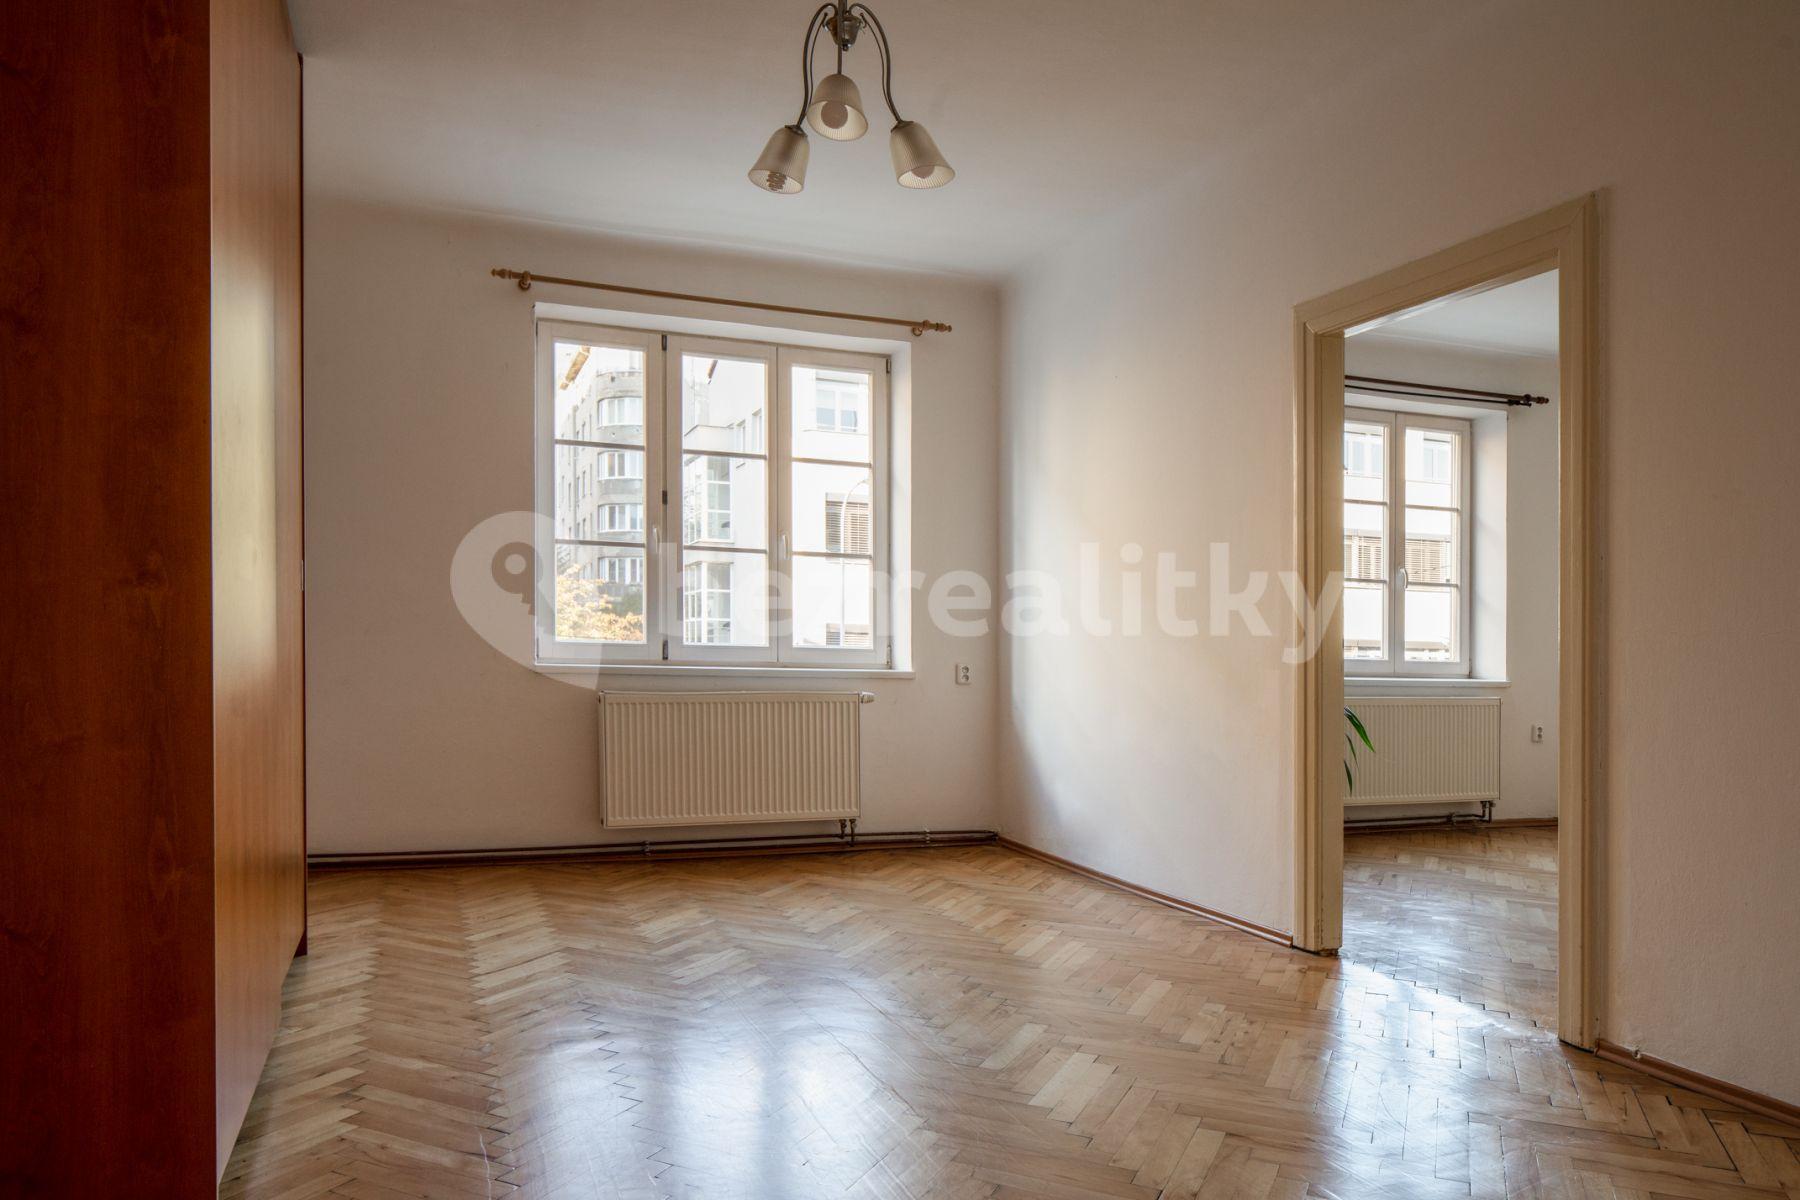 2 bedroom flat for sale, 81 m², Merhautova, Brno, Jihomoravský Region